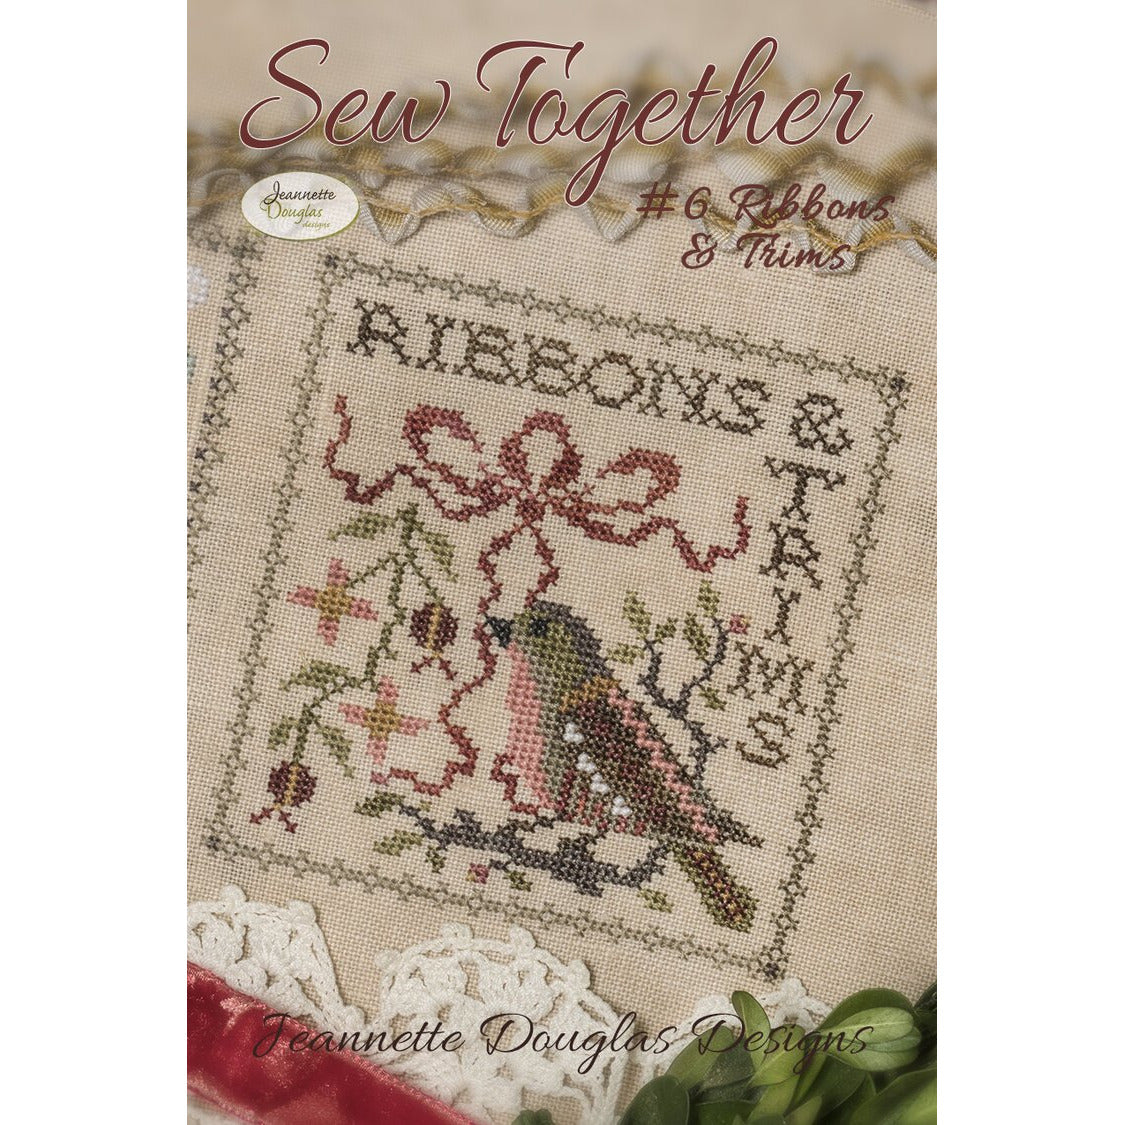 Jeannette Douglas Designs | Sew Together #6 Ribbons & Trims Pattern